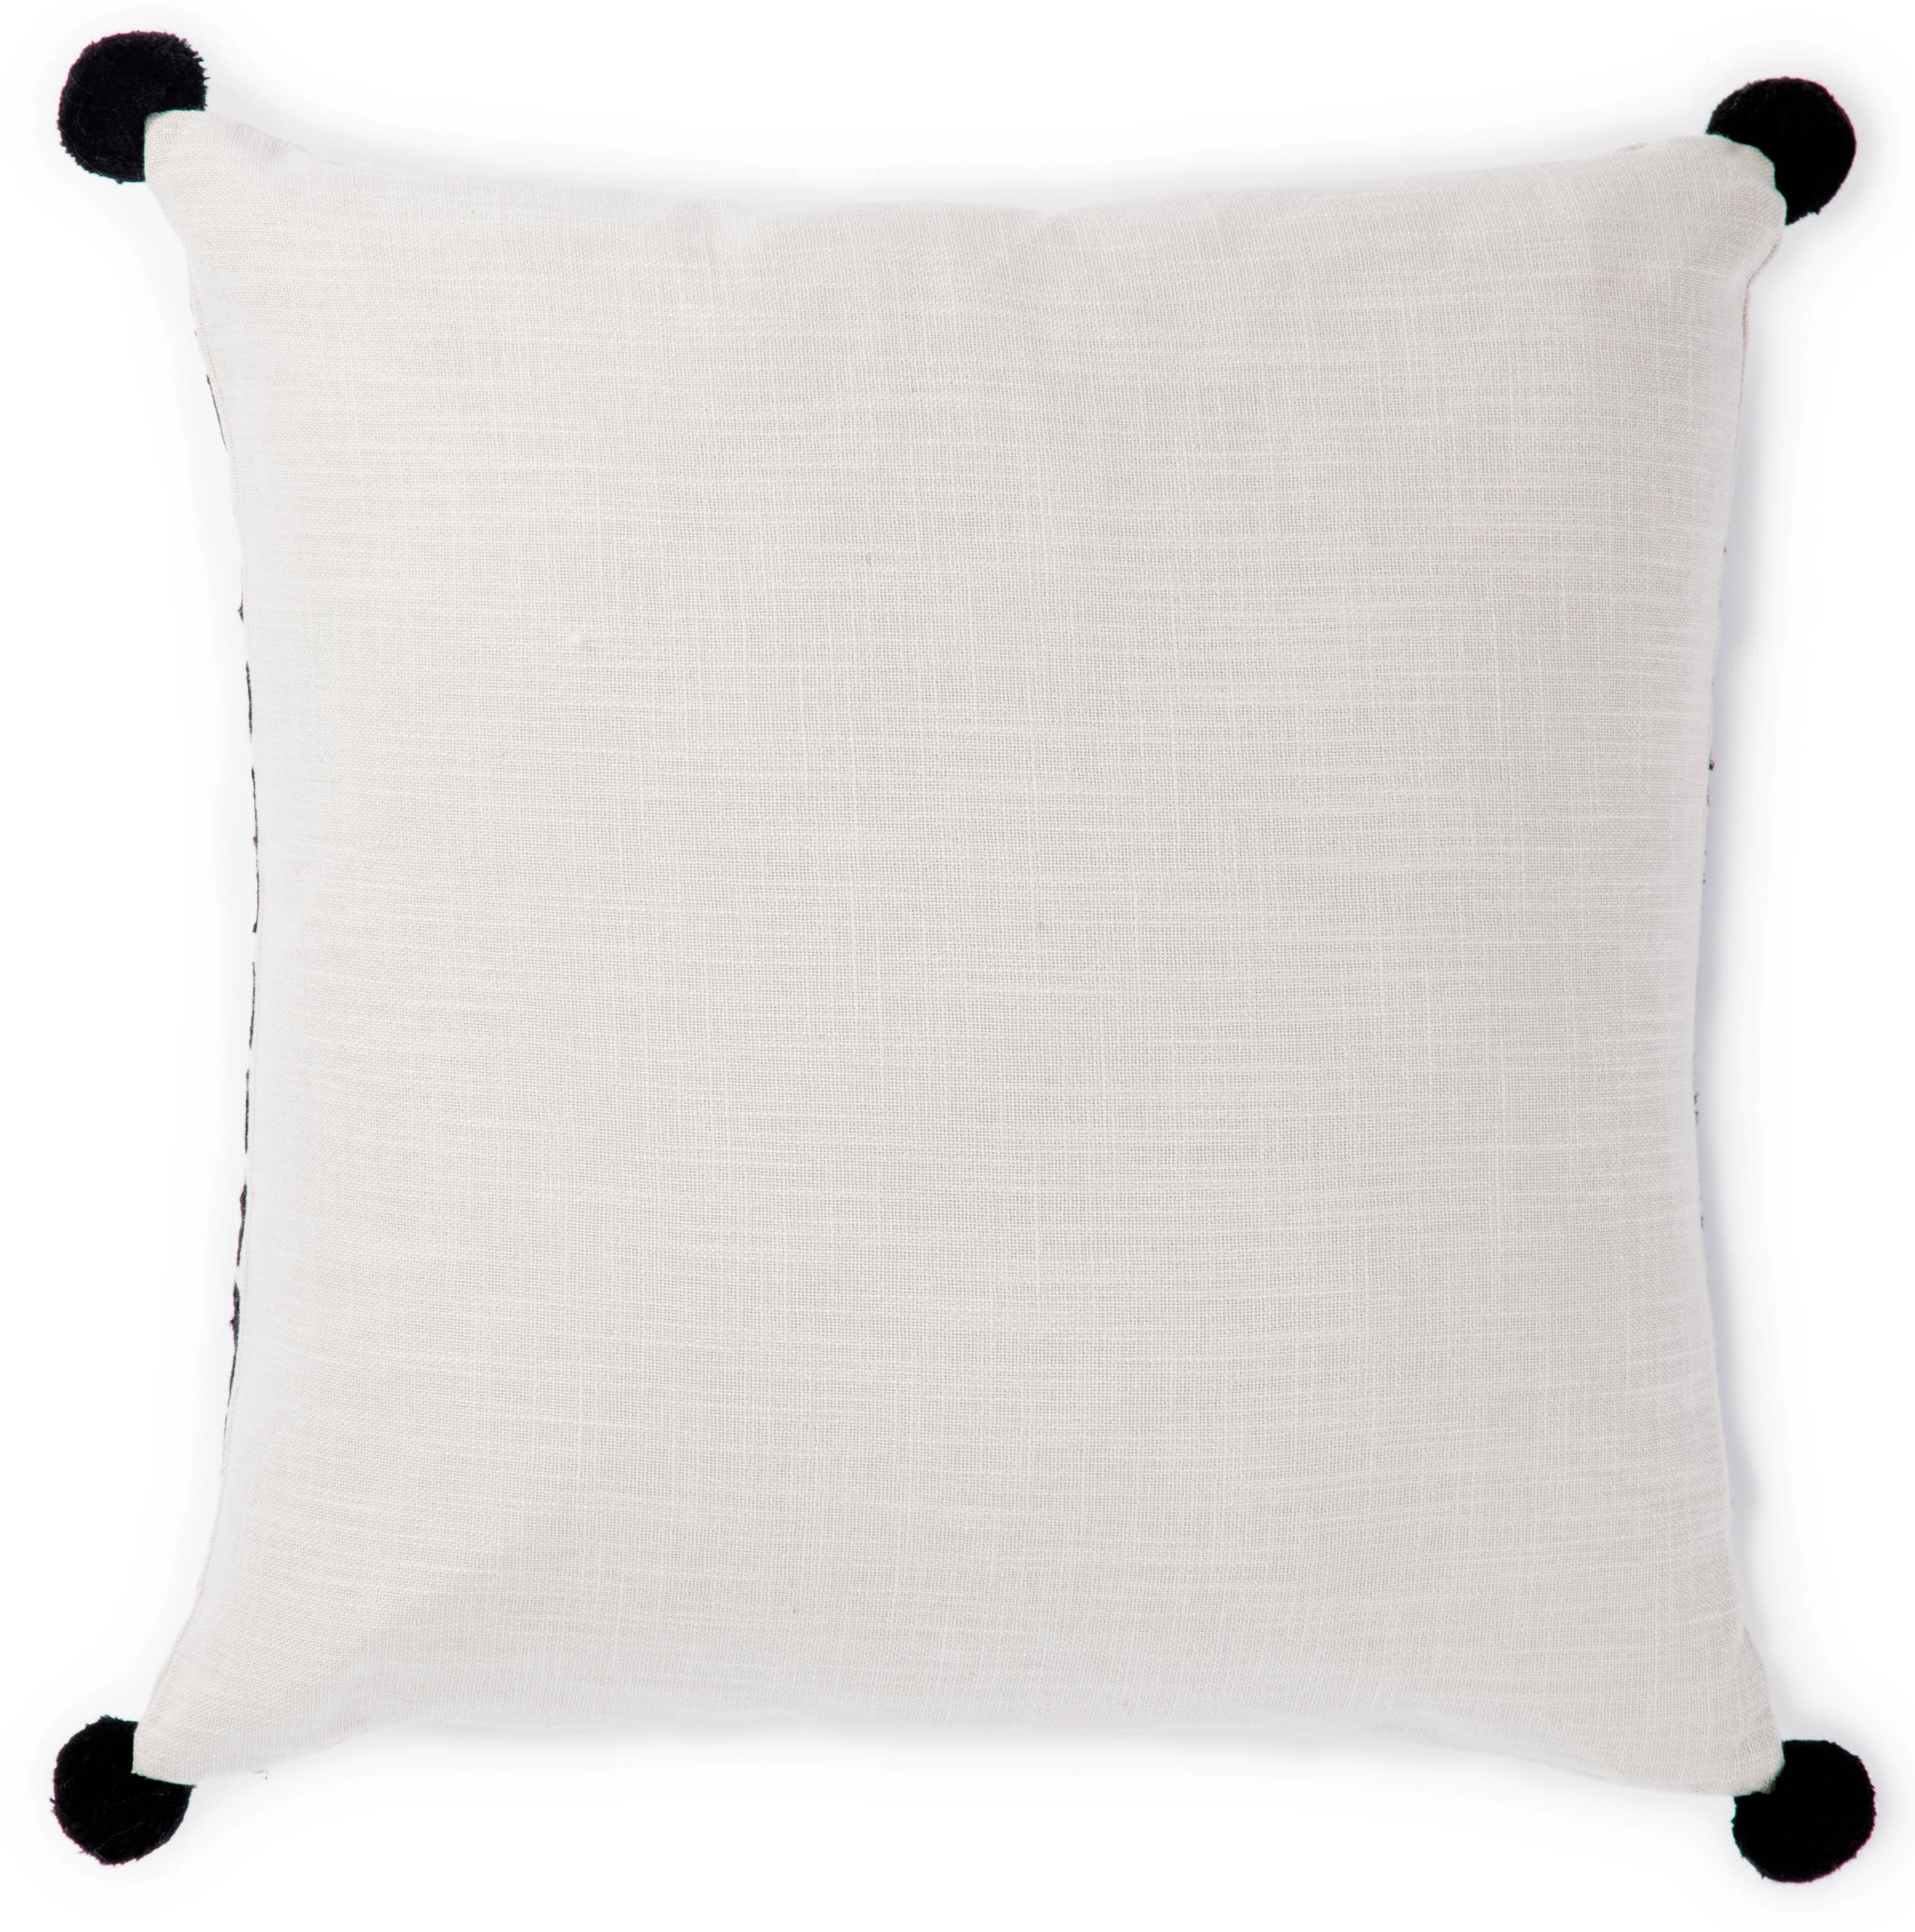 Design (US) Black 22"X22" Pillow - Image 1